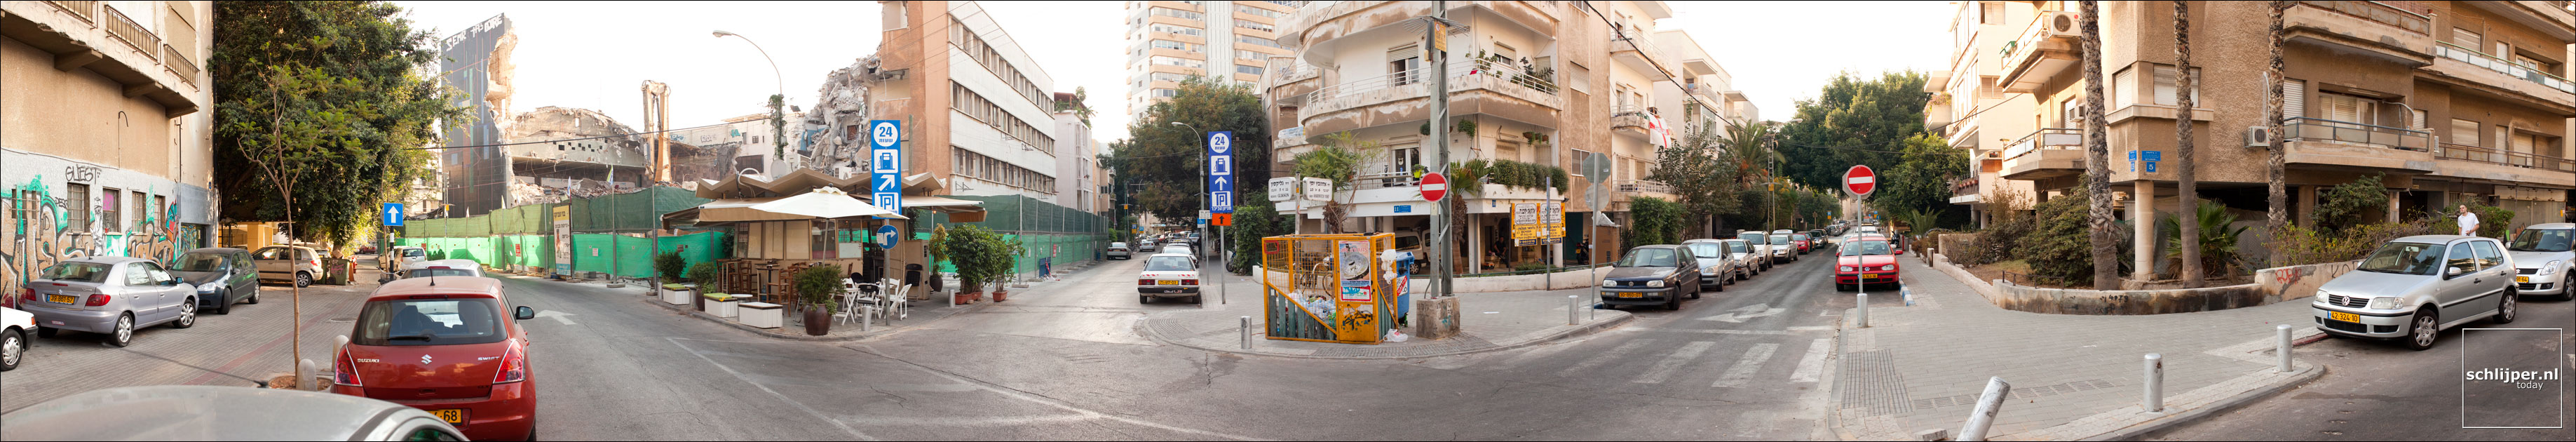 Israel, Tel Aviv, 10 november 2010